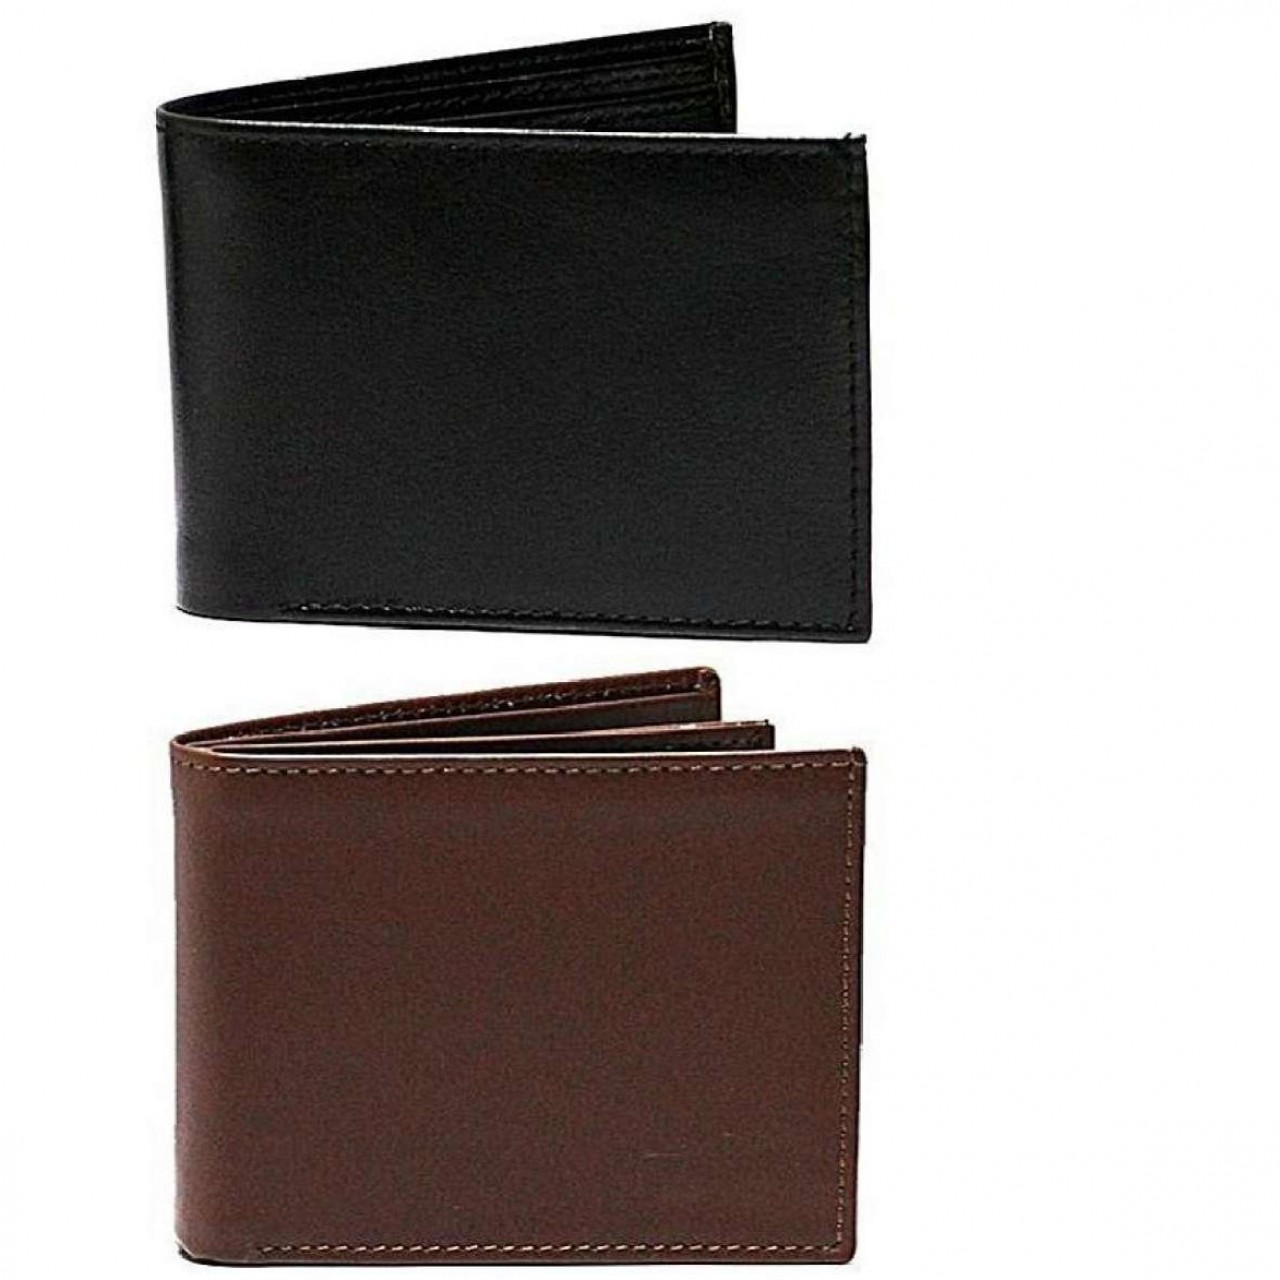 Leather Wallet For Men - Pack of 2 - Black & Brown